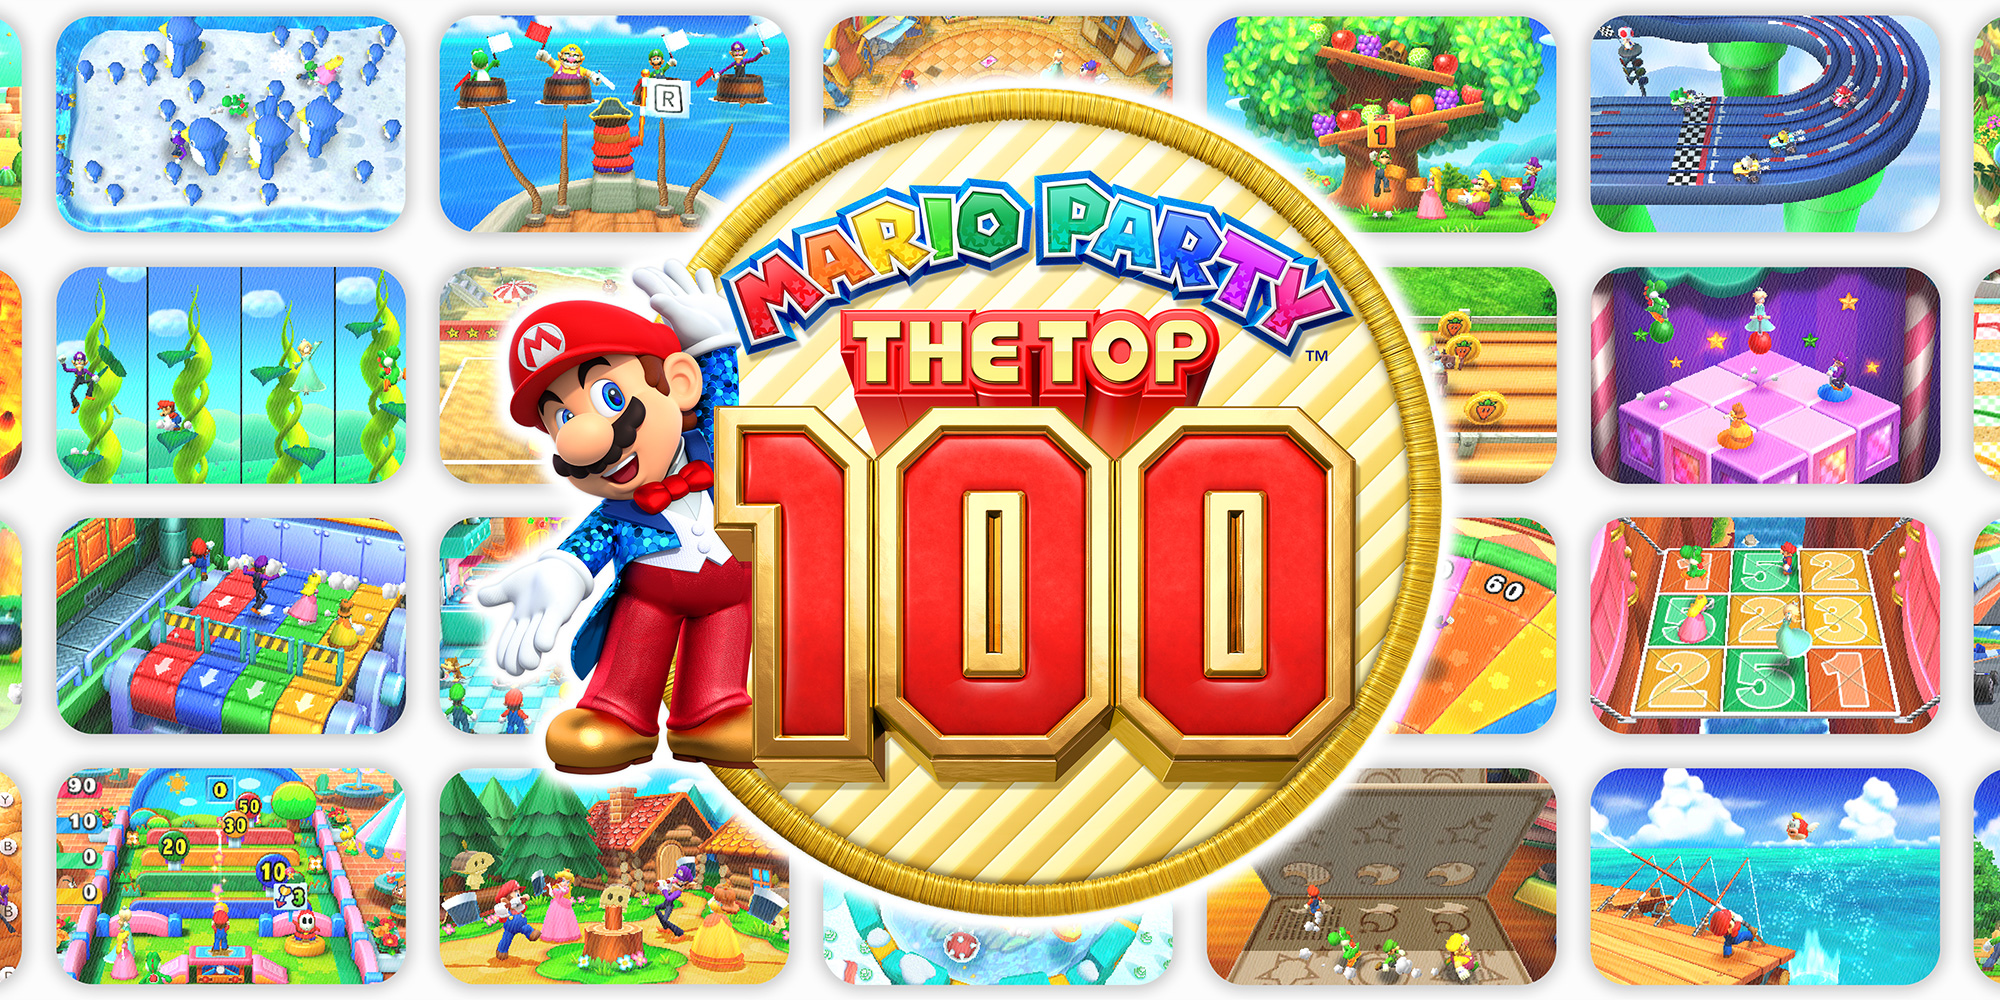 top 100 nintendo switch games